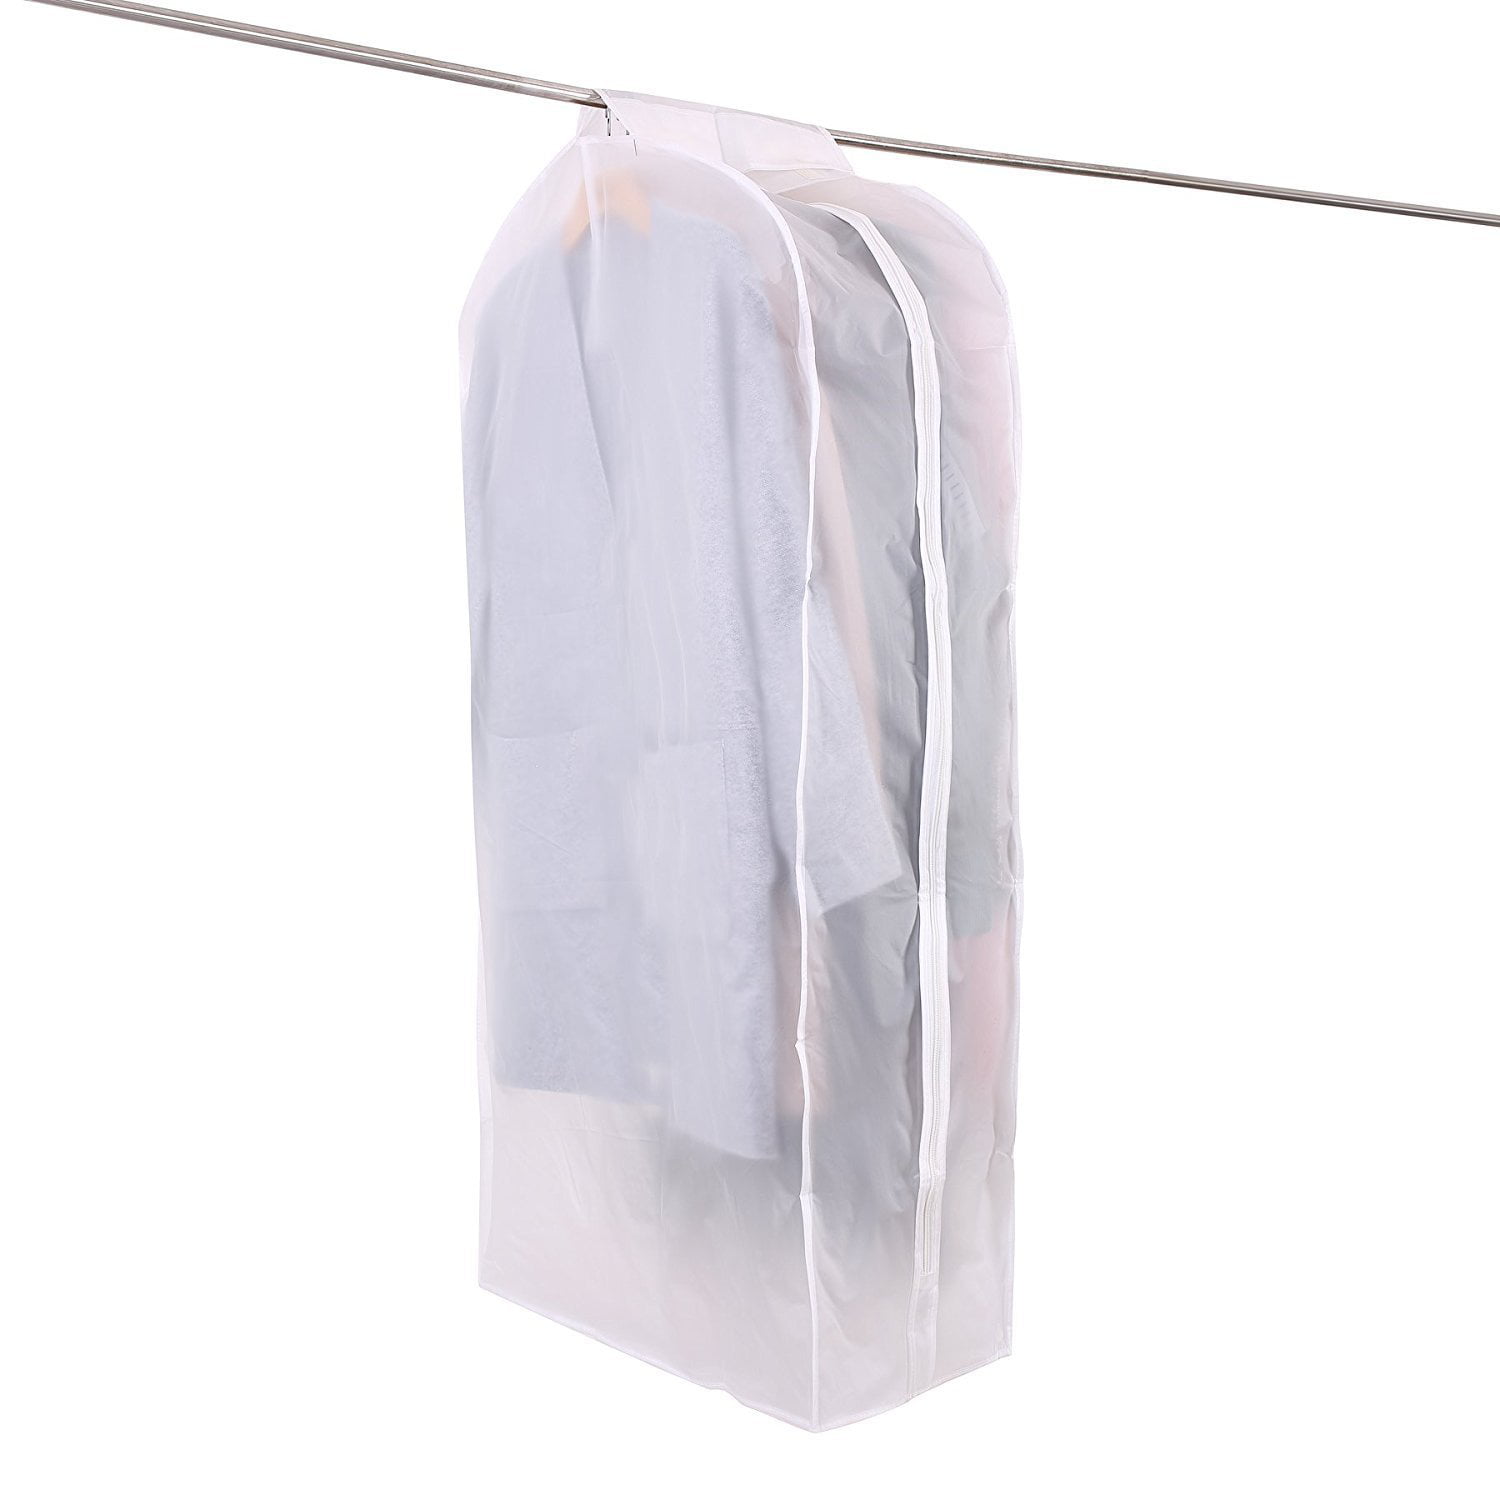 MEIYIN Hanging PEVA Waterproof Garment Bags Suit Travel Clothes Dress Cover Dustproof